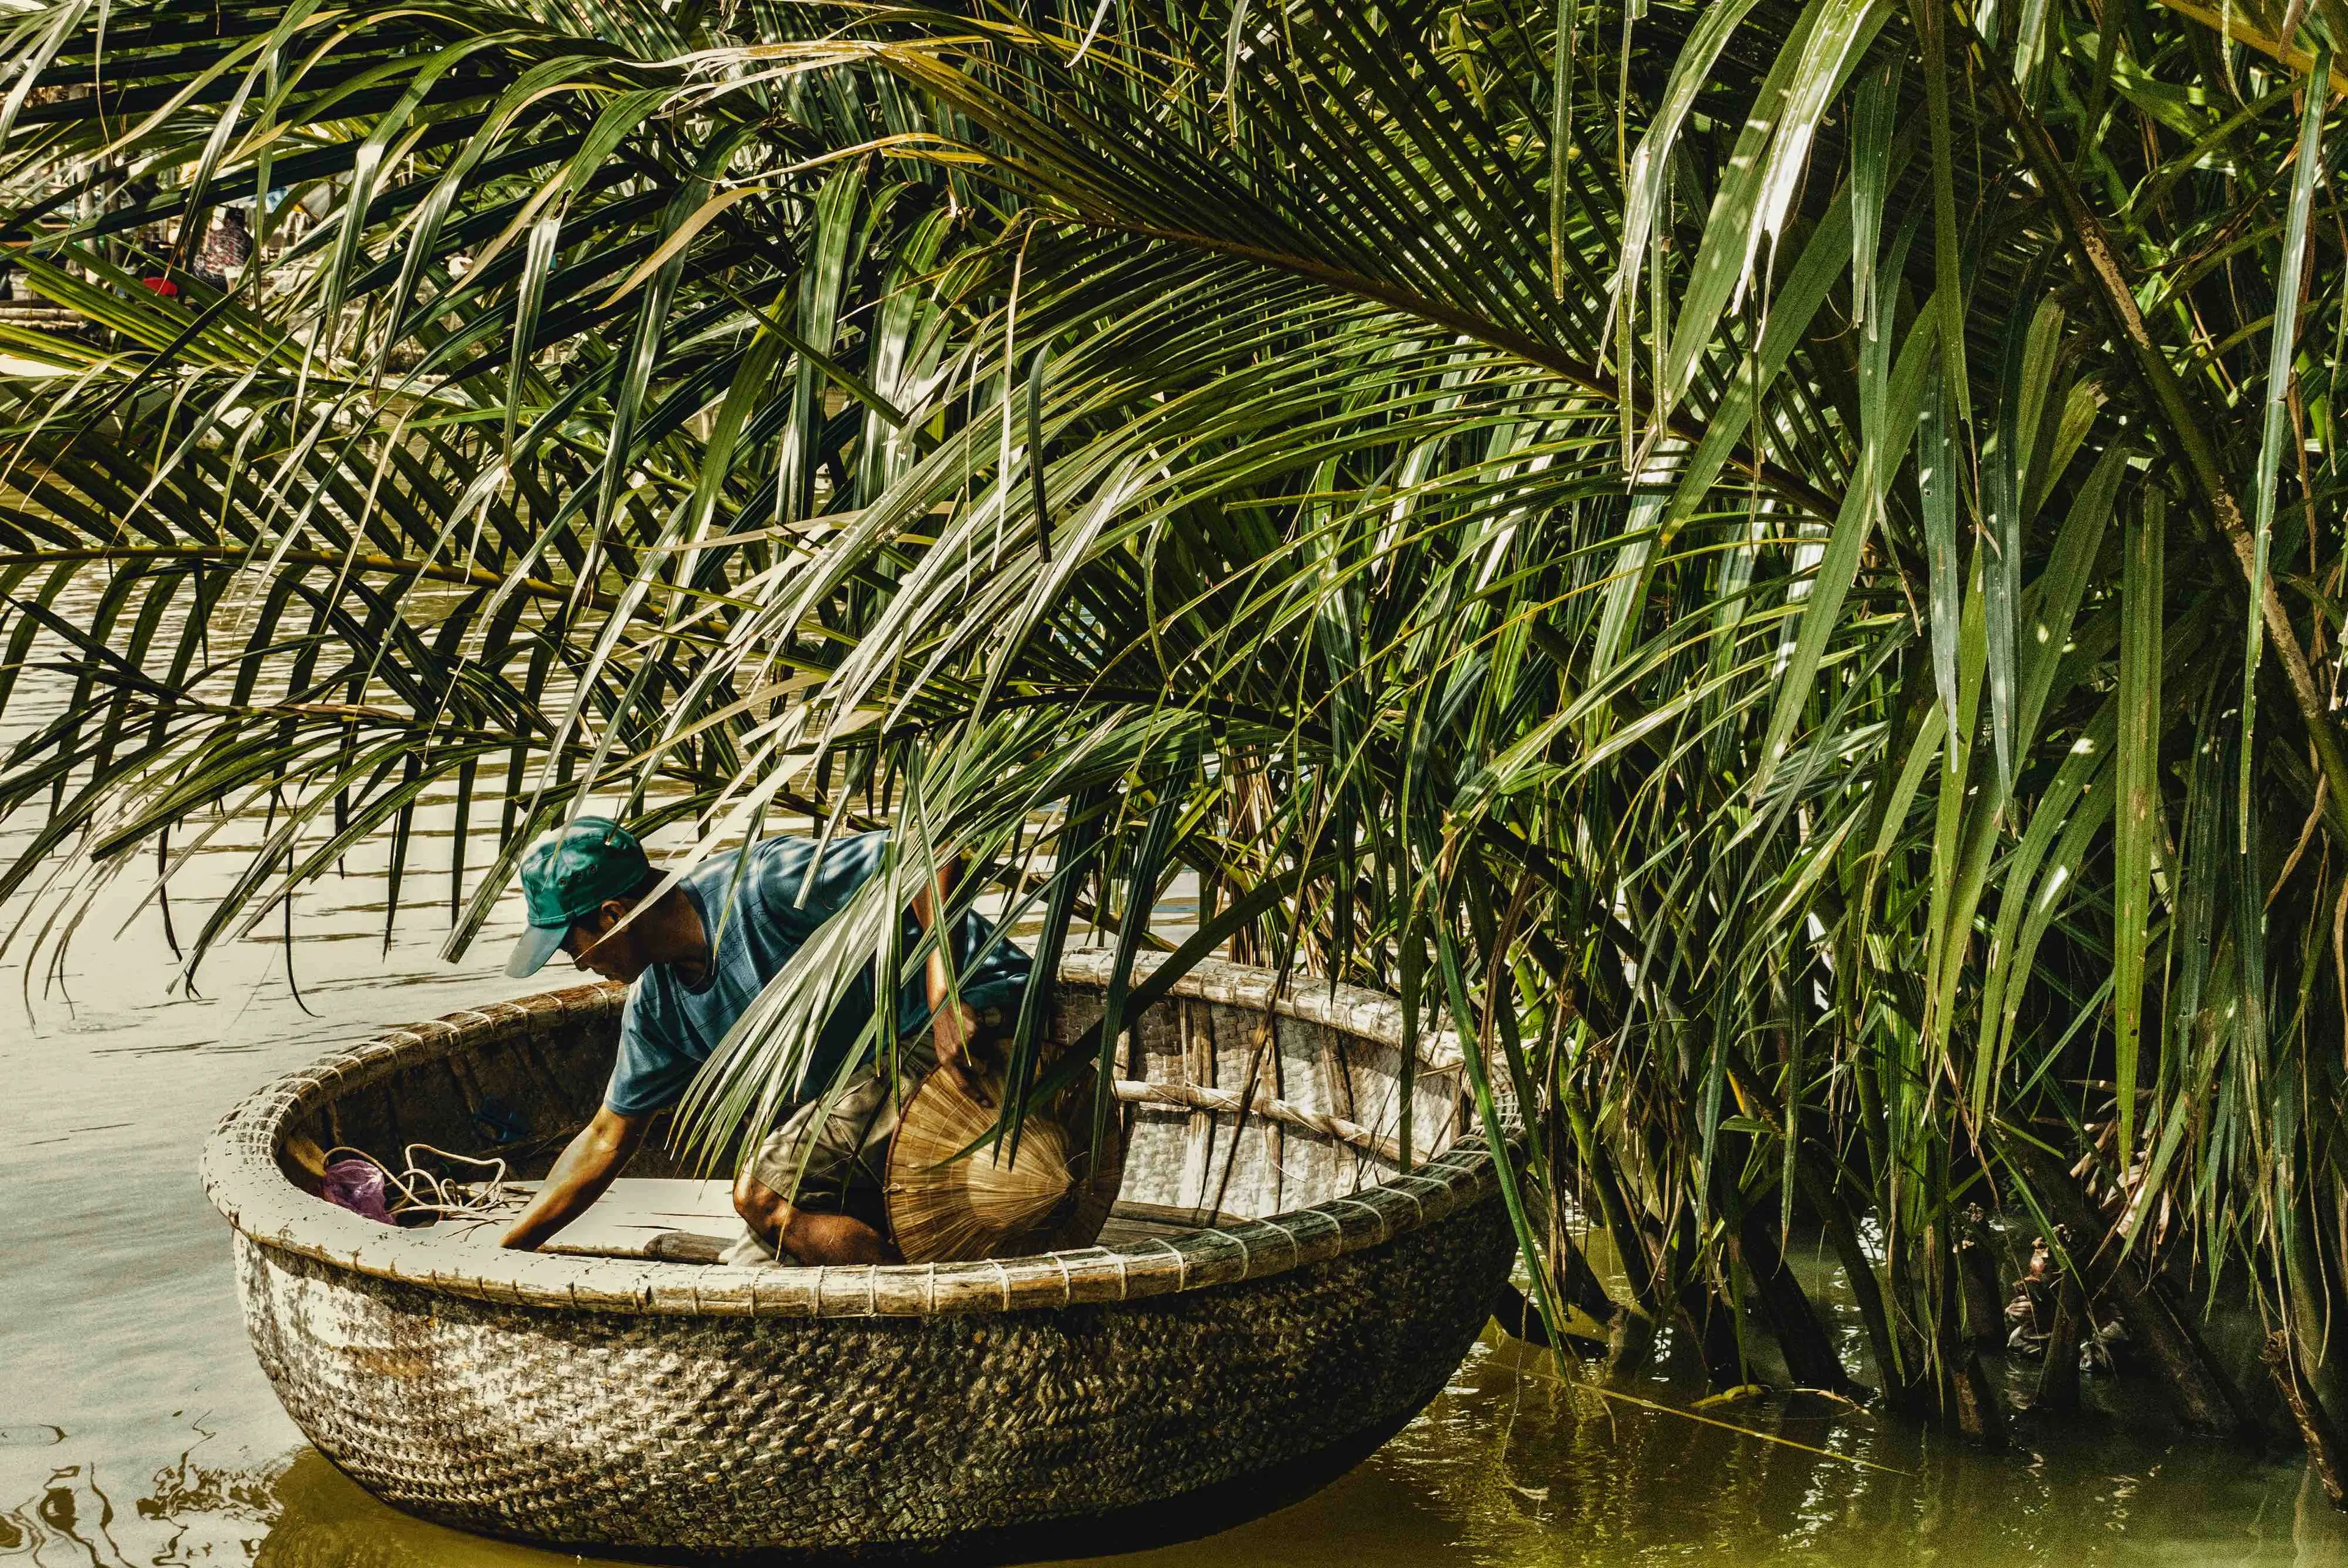 Basket boat - traditional transport of central coast of vietnam